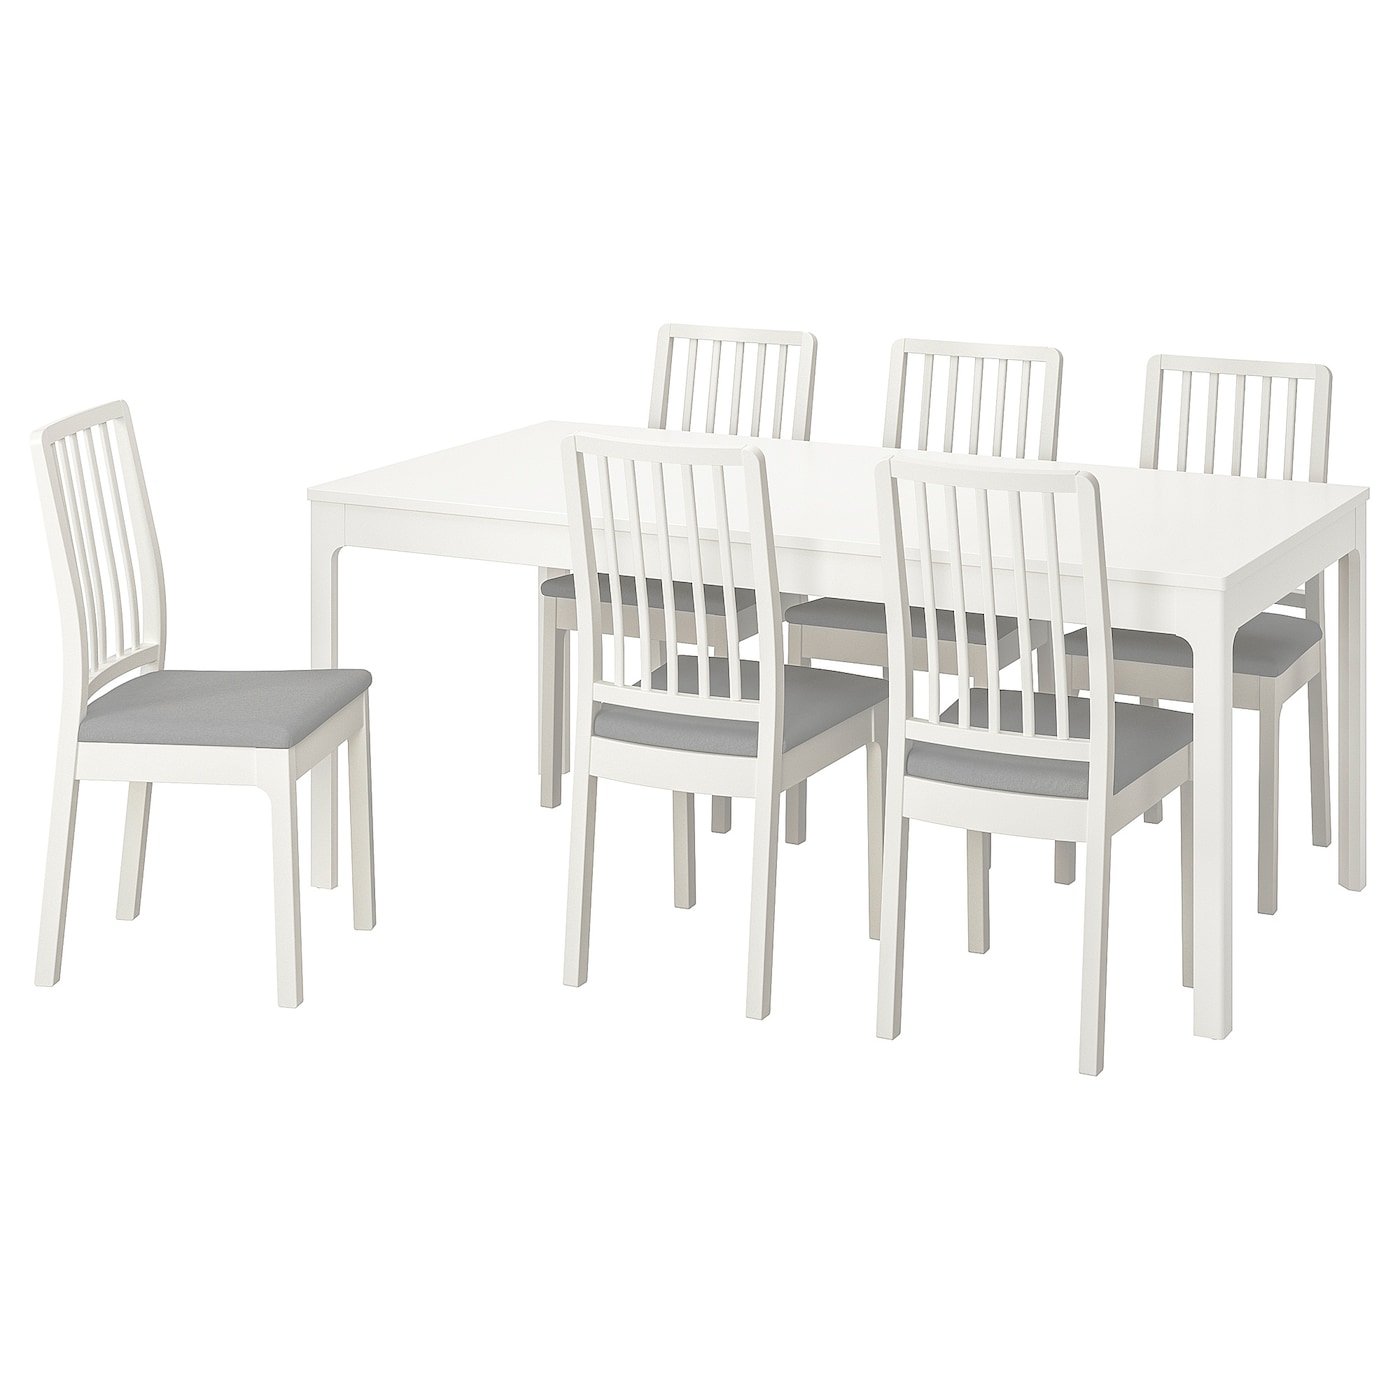 Стол и 6 стульев - IKEA EKEDALEN/ ЭКЕДАЛЕН ИКЕА, 180х240х90 см, белый/серый